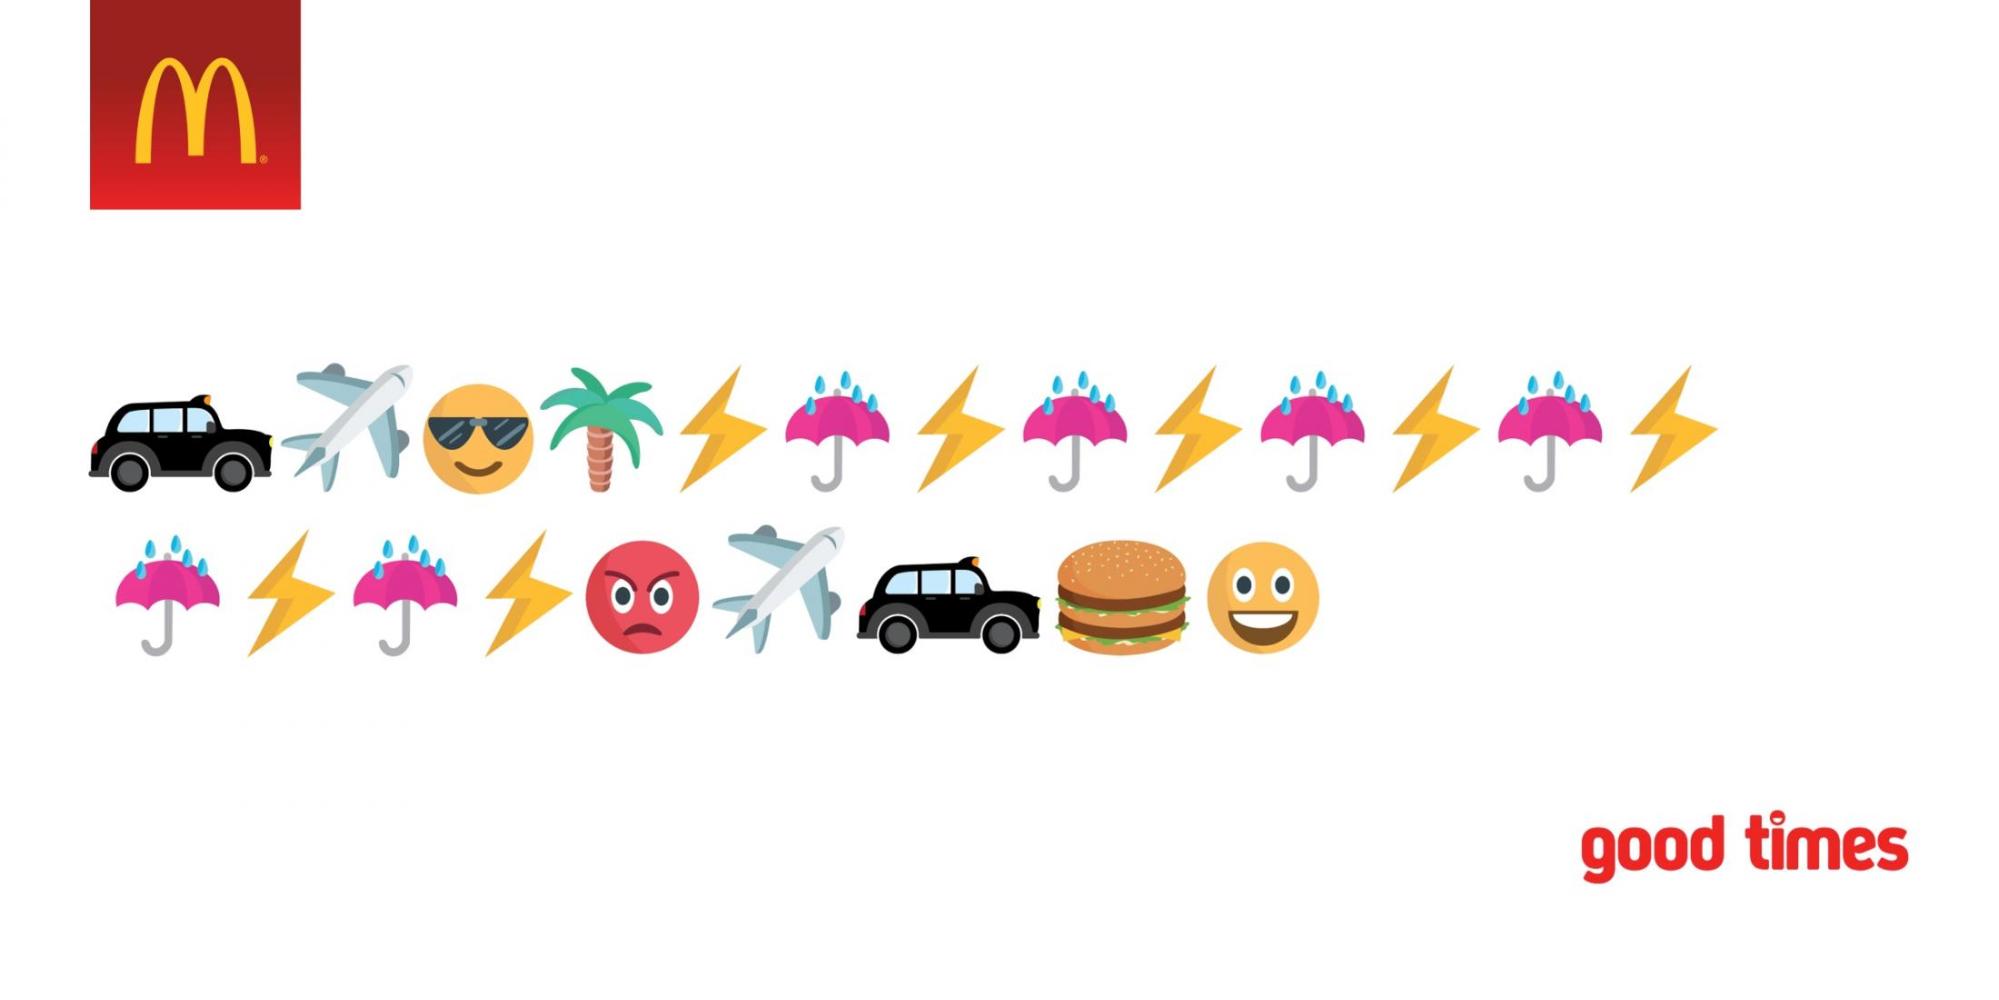 mcdonalds-emoji-ad